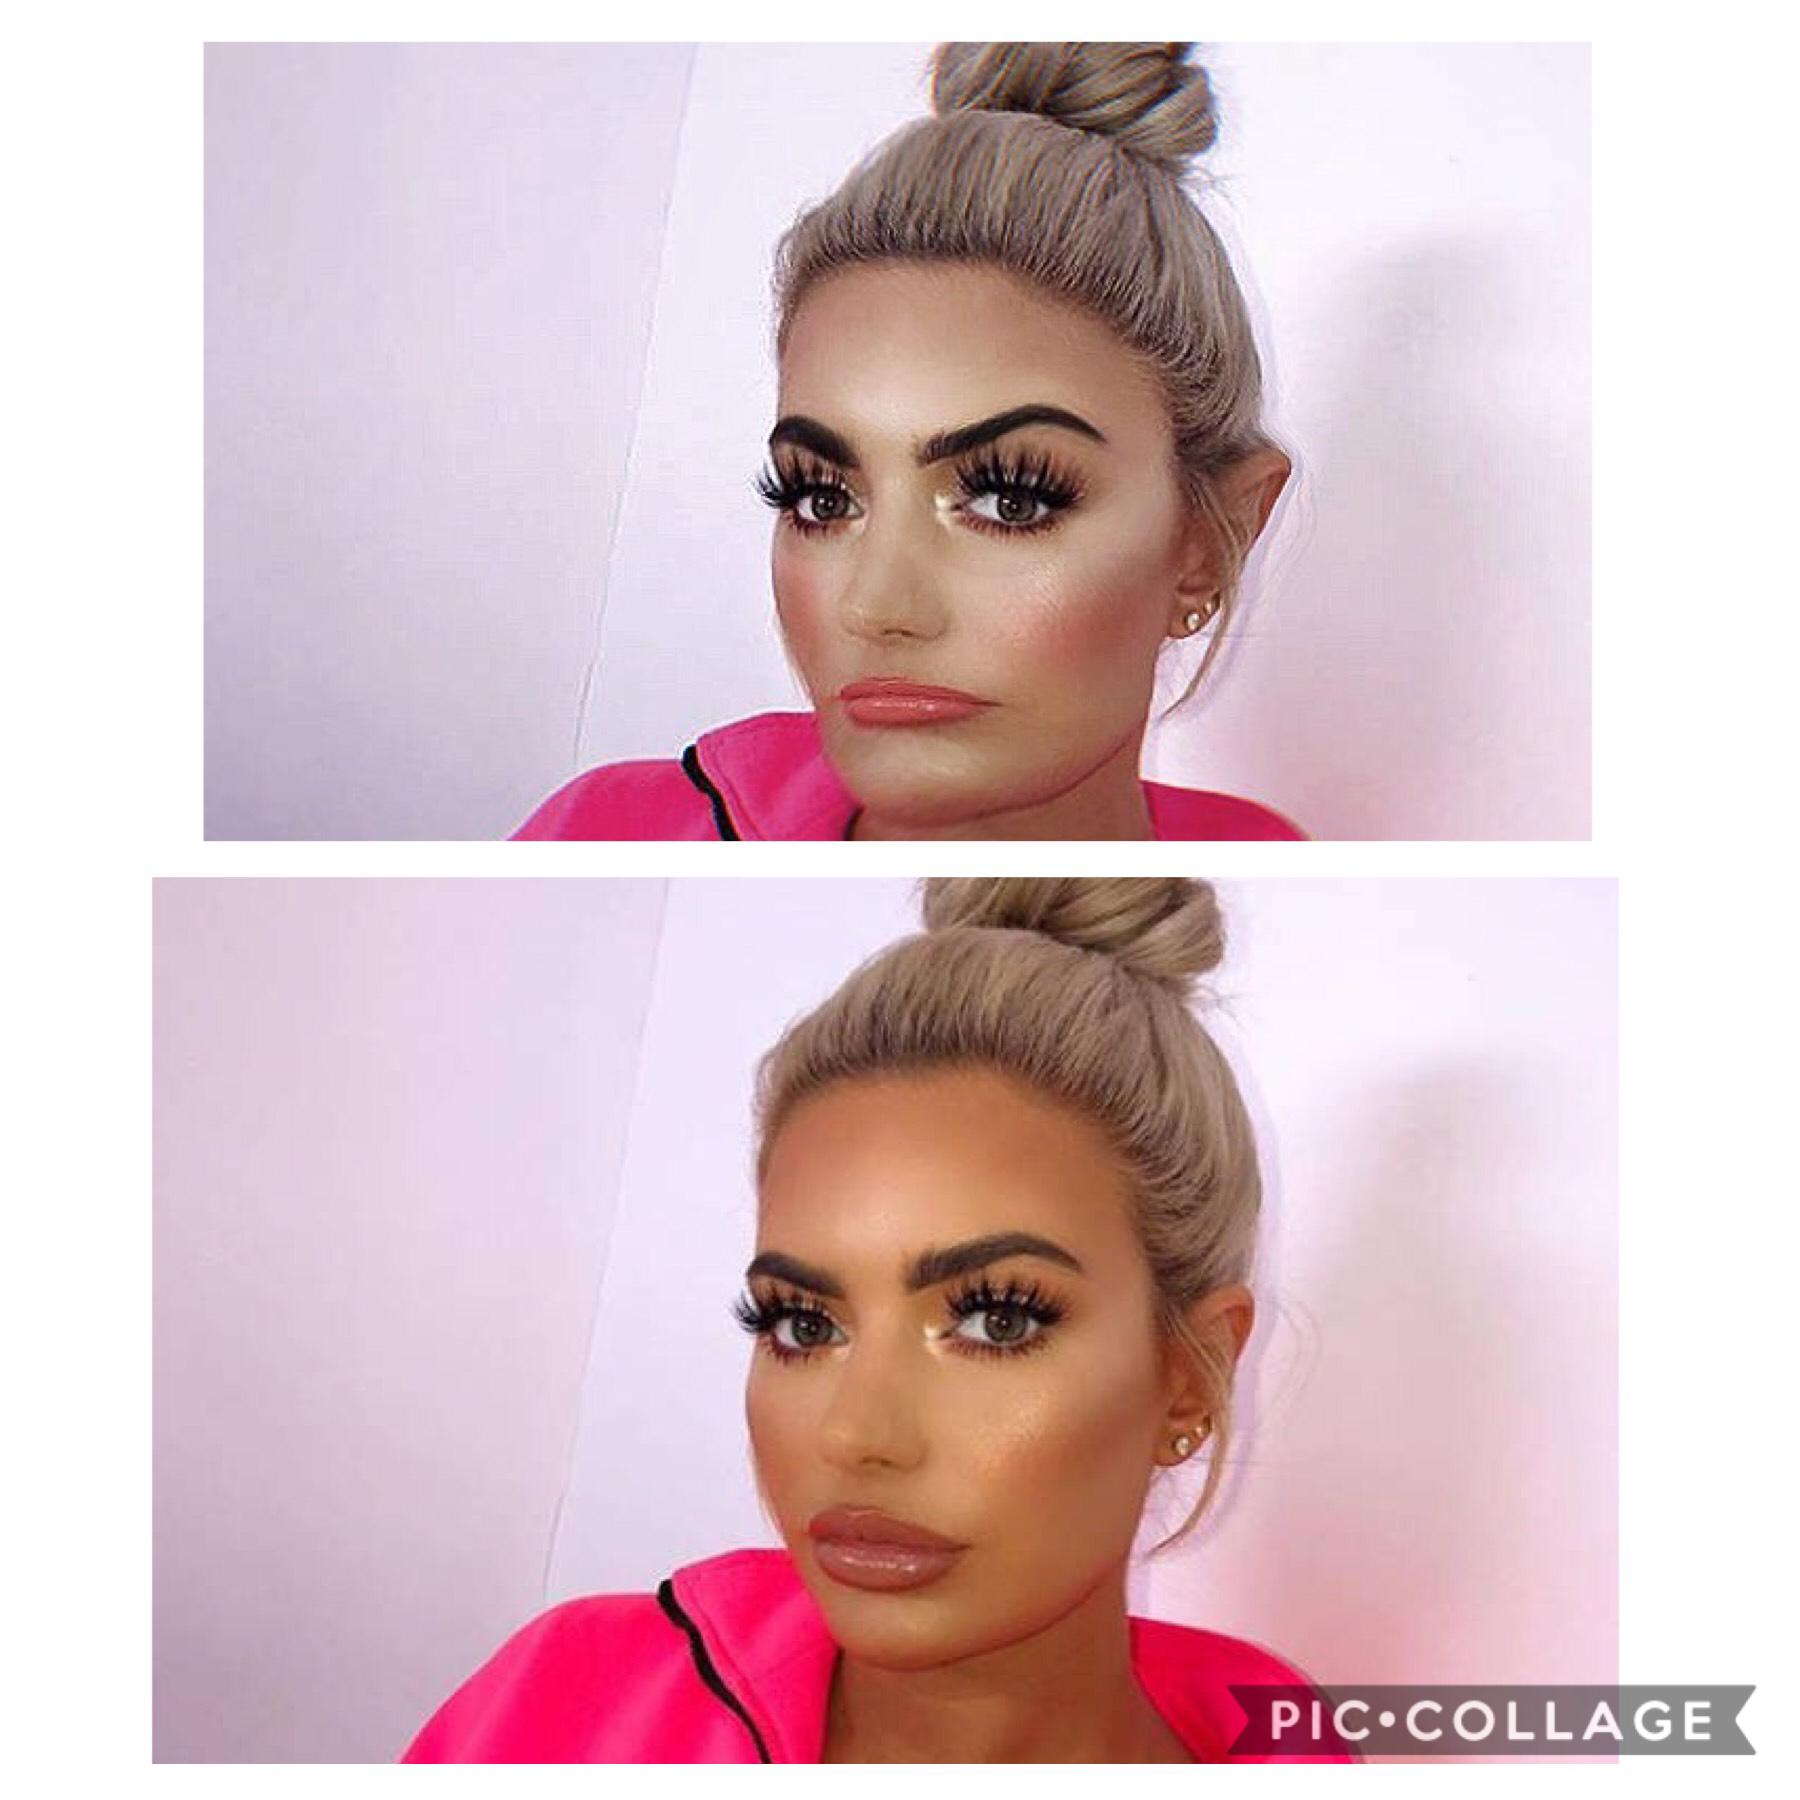 Megan from love island photoshop transformation 